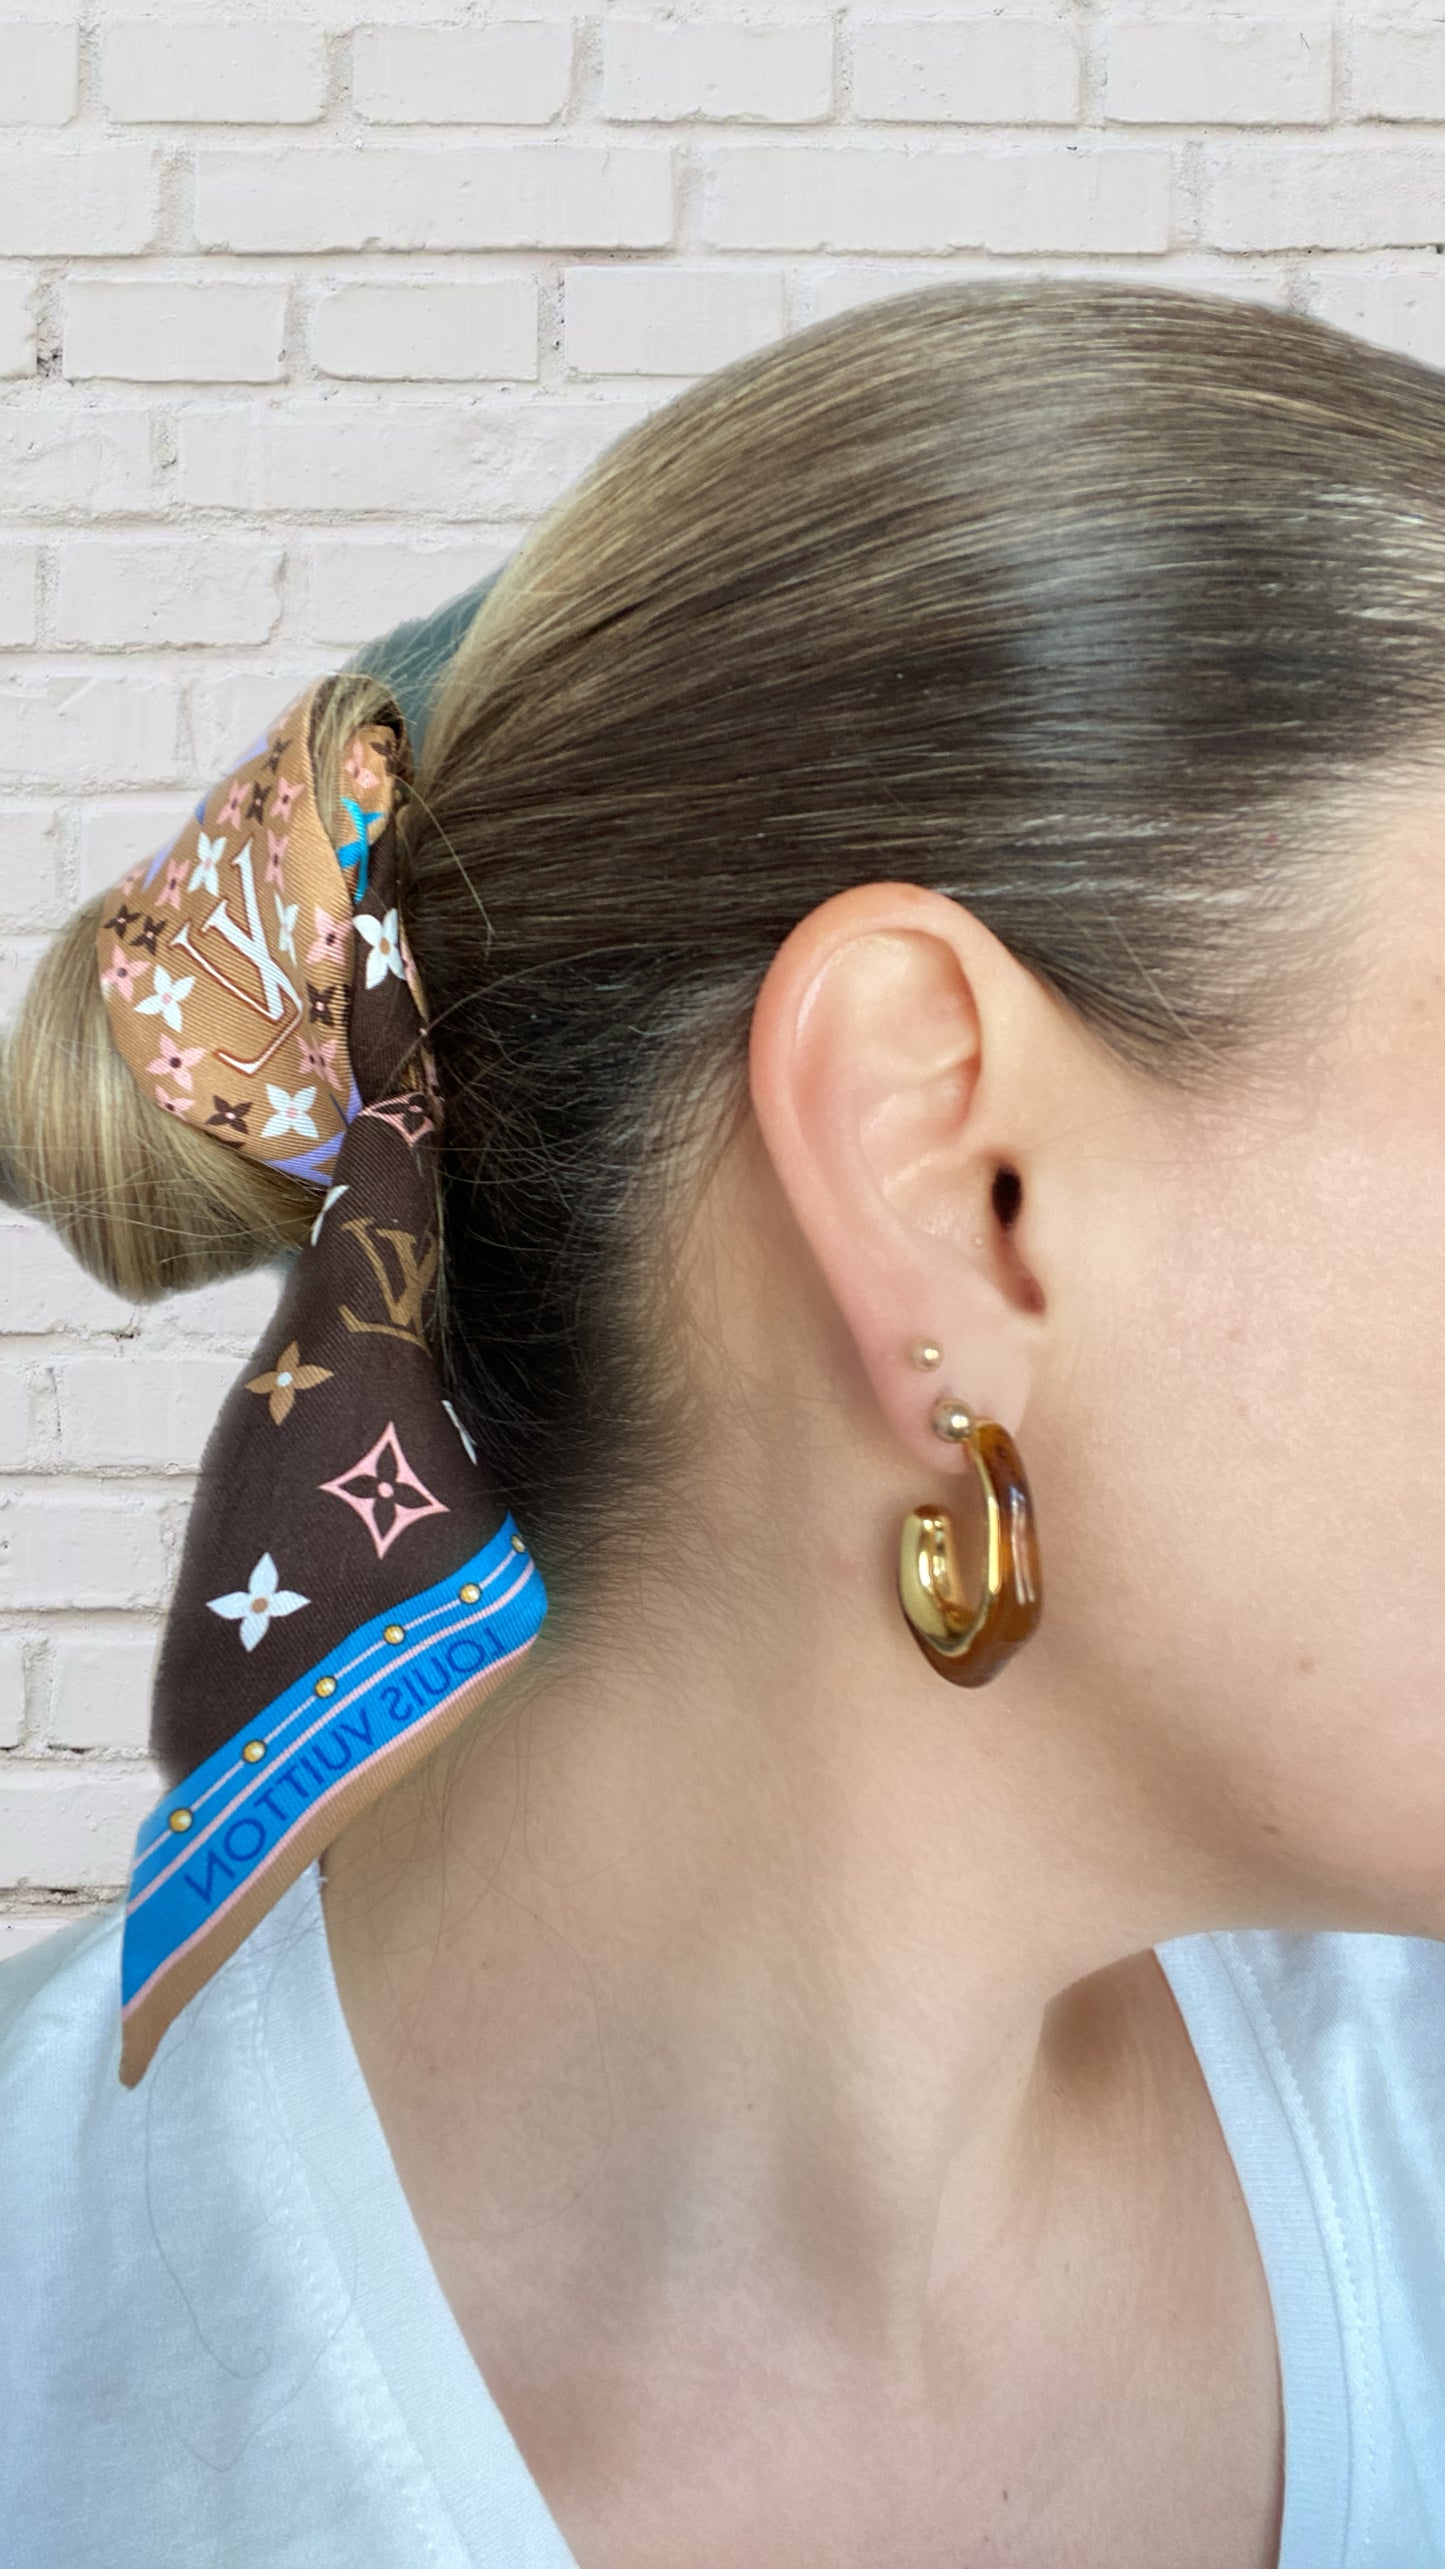 "BURCU" Gold Plated Open Hoop Earrings with Plant-Based Resin